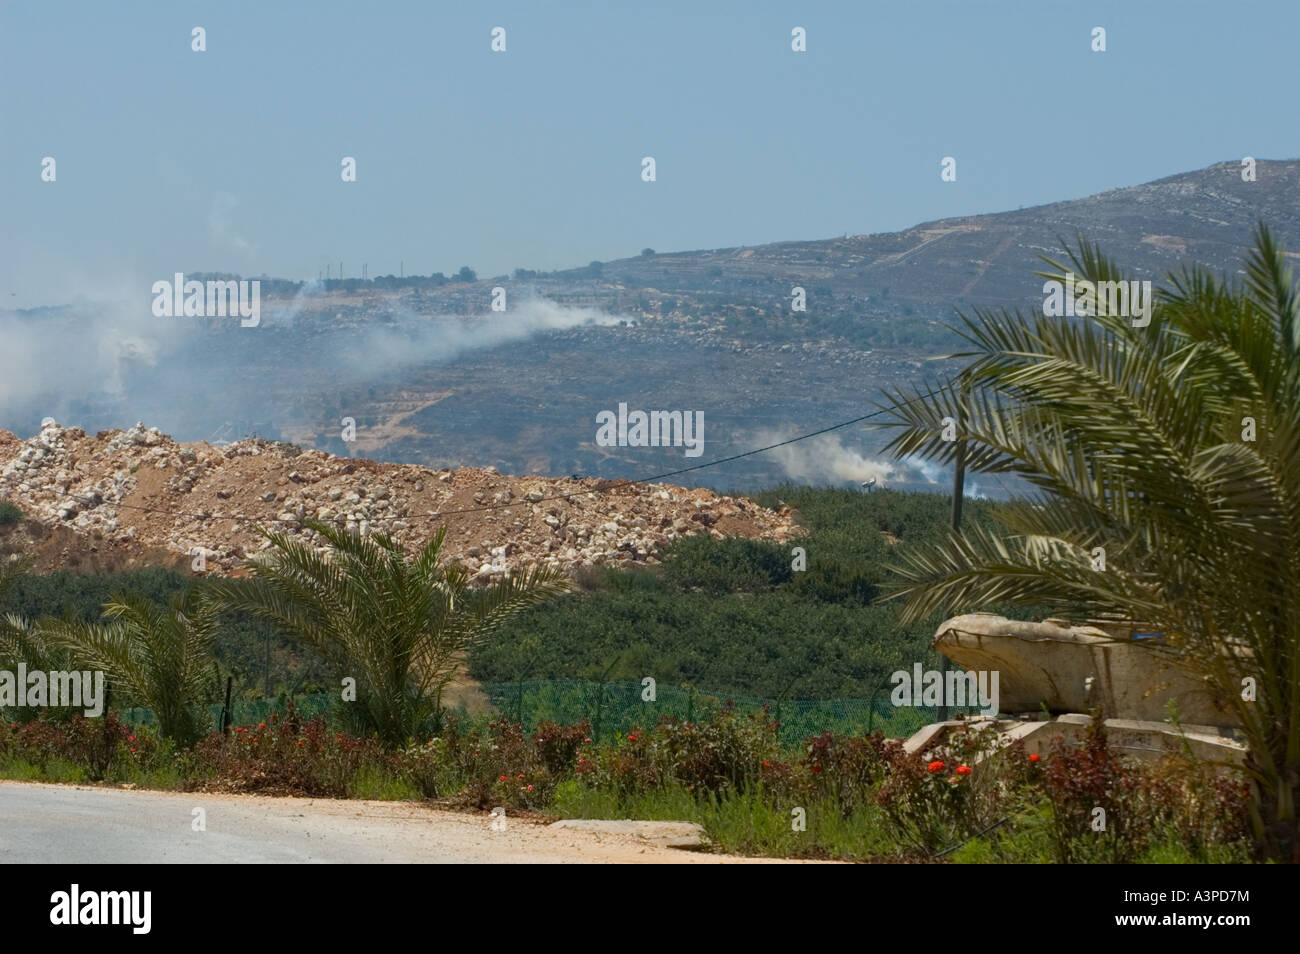 Smoke trails on Isrel lebanon border Stock Photo